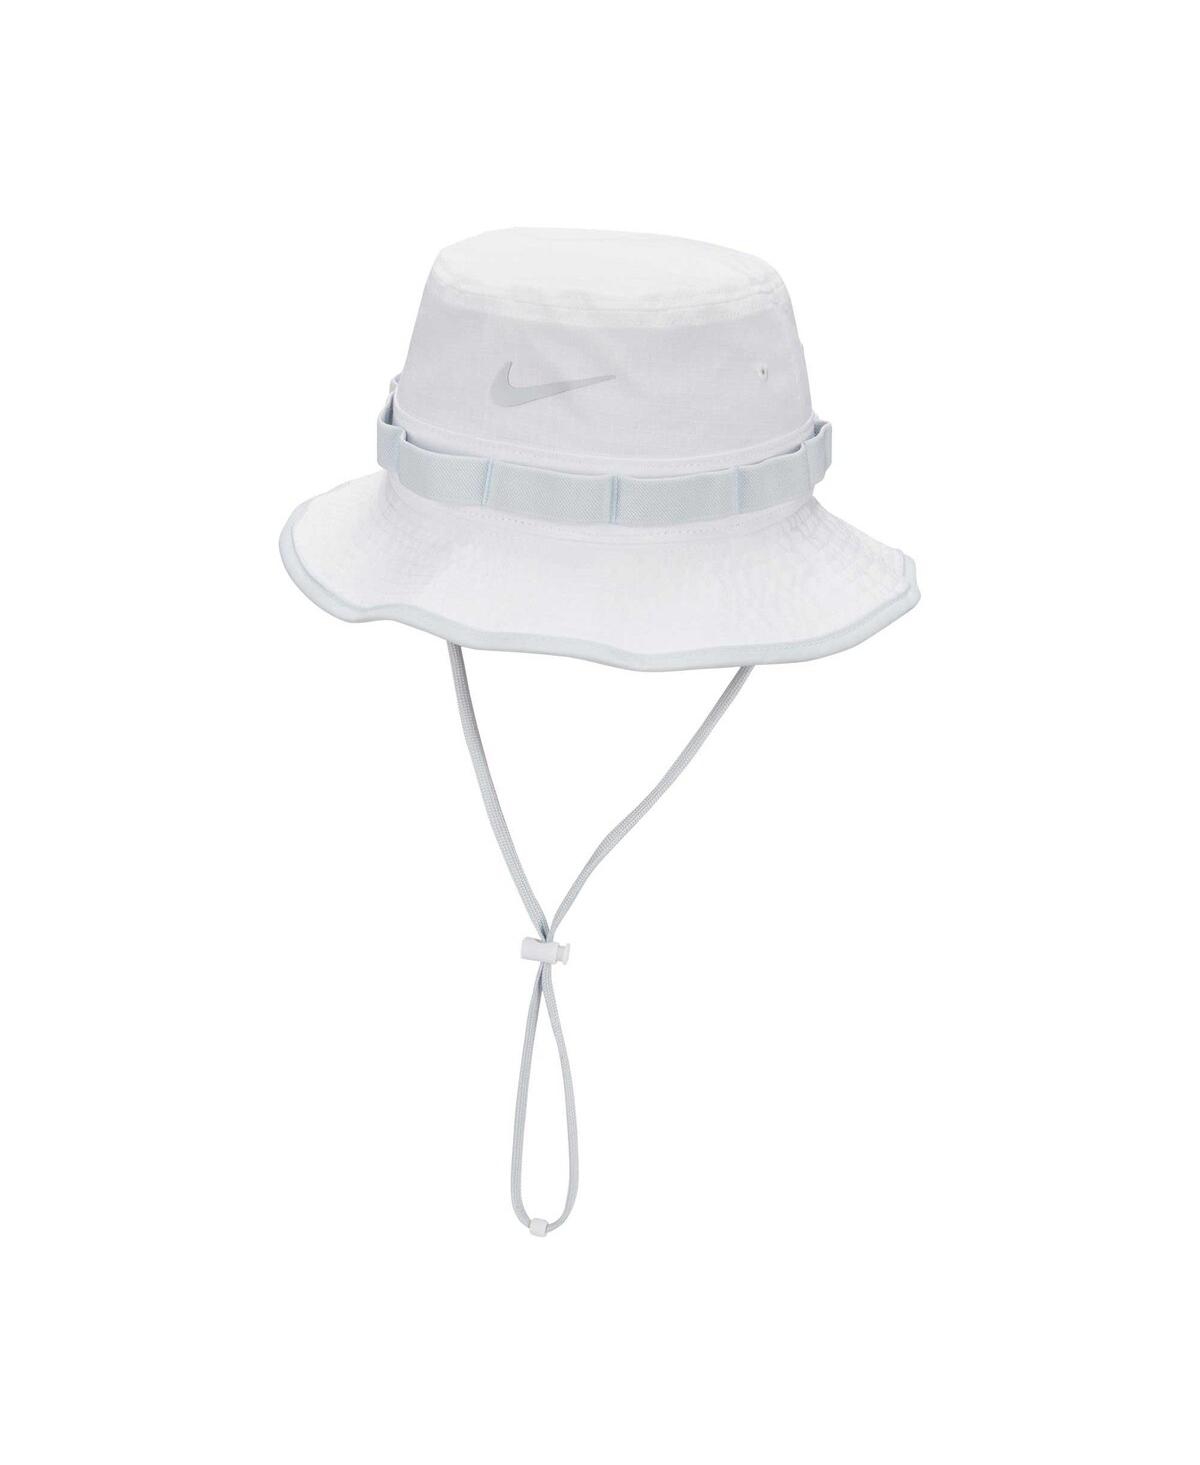 Shop Nike Men's  Apex Performance Bucket Hat In Khaki